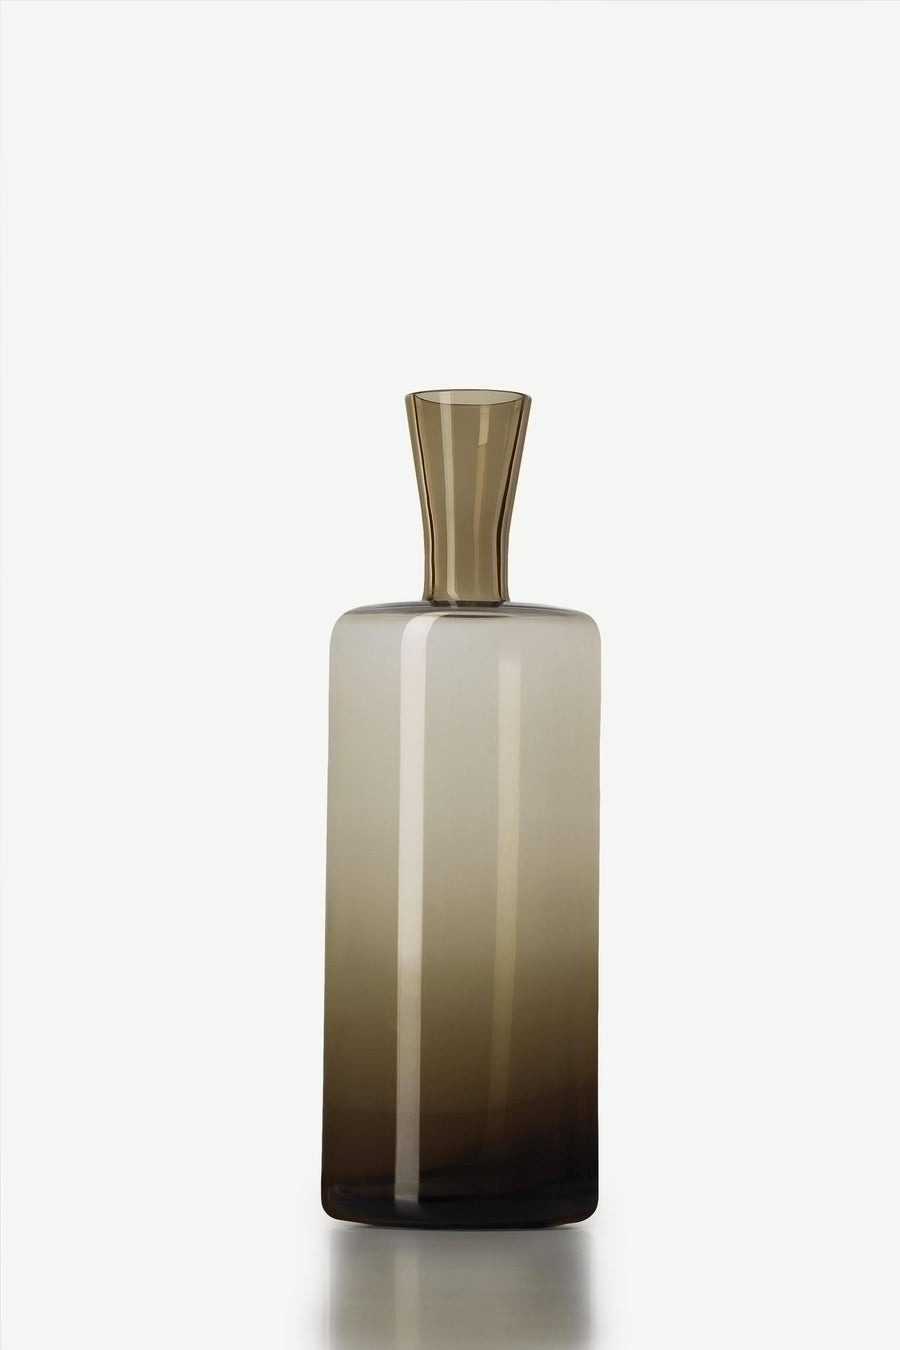 Morandi Bottle No. 10 Objects Nason Moretti 